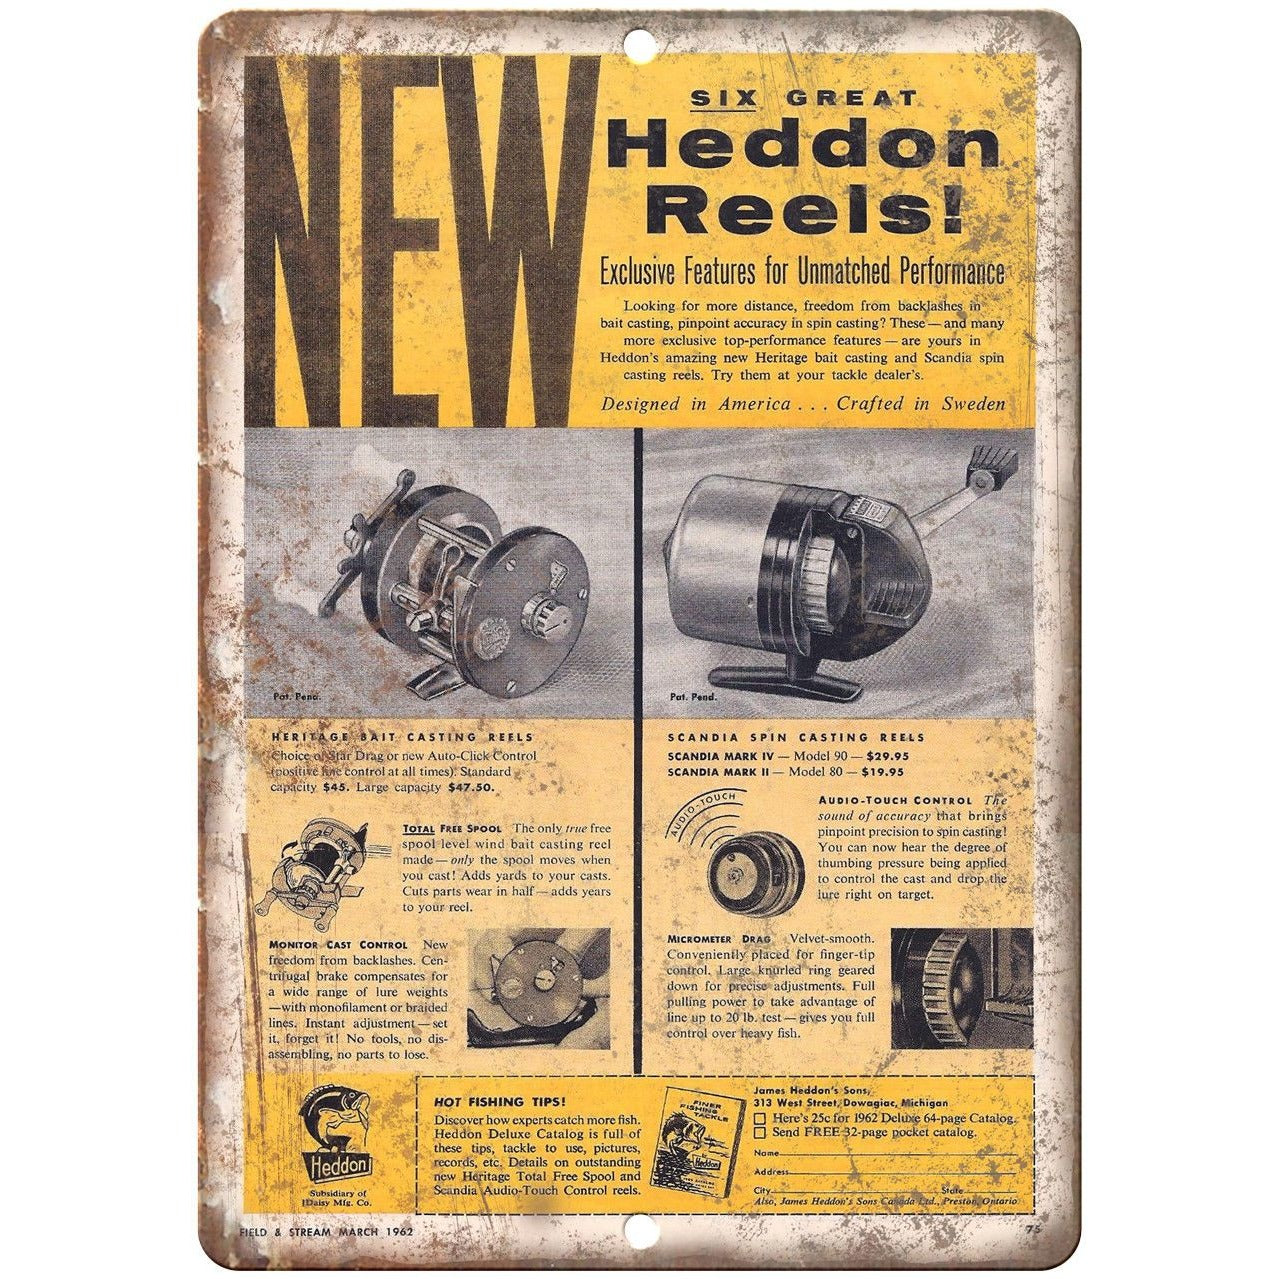 Heddon Fishing Reels Vintage Print Ad - 10' x 7 Reproduction